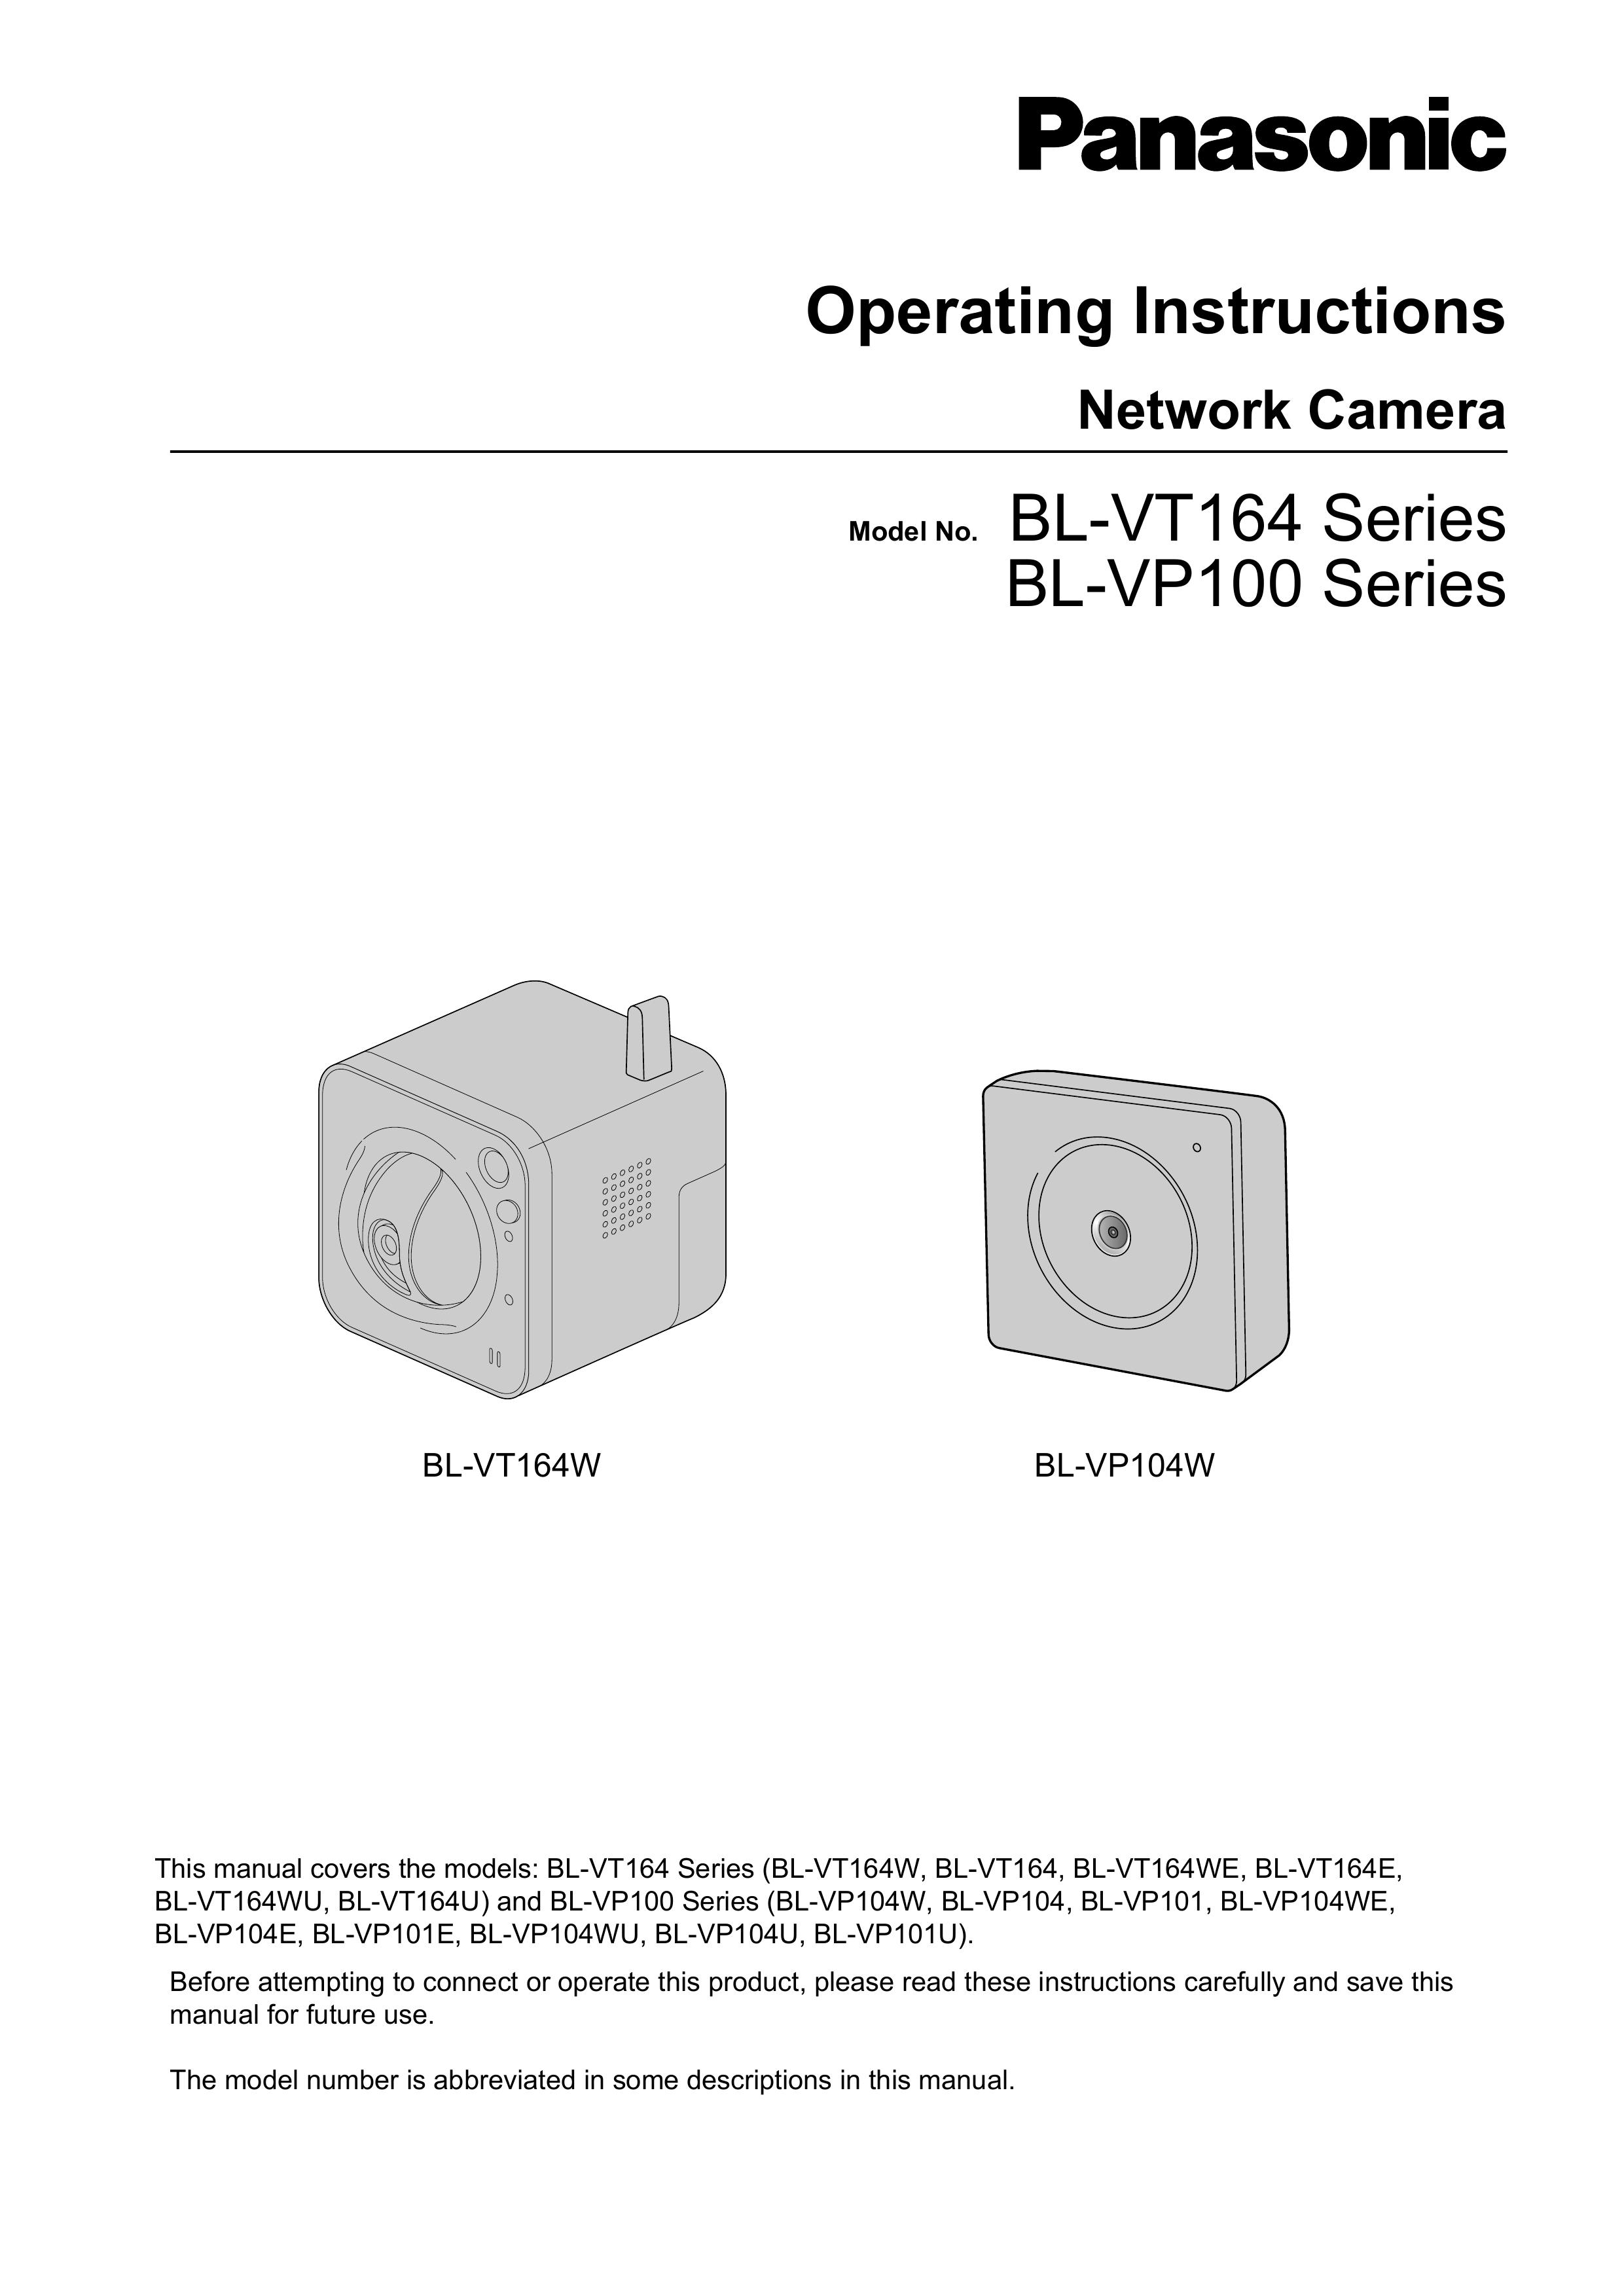 Panasonic BL-VT164W Security Camera User Manual